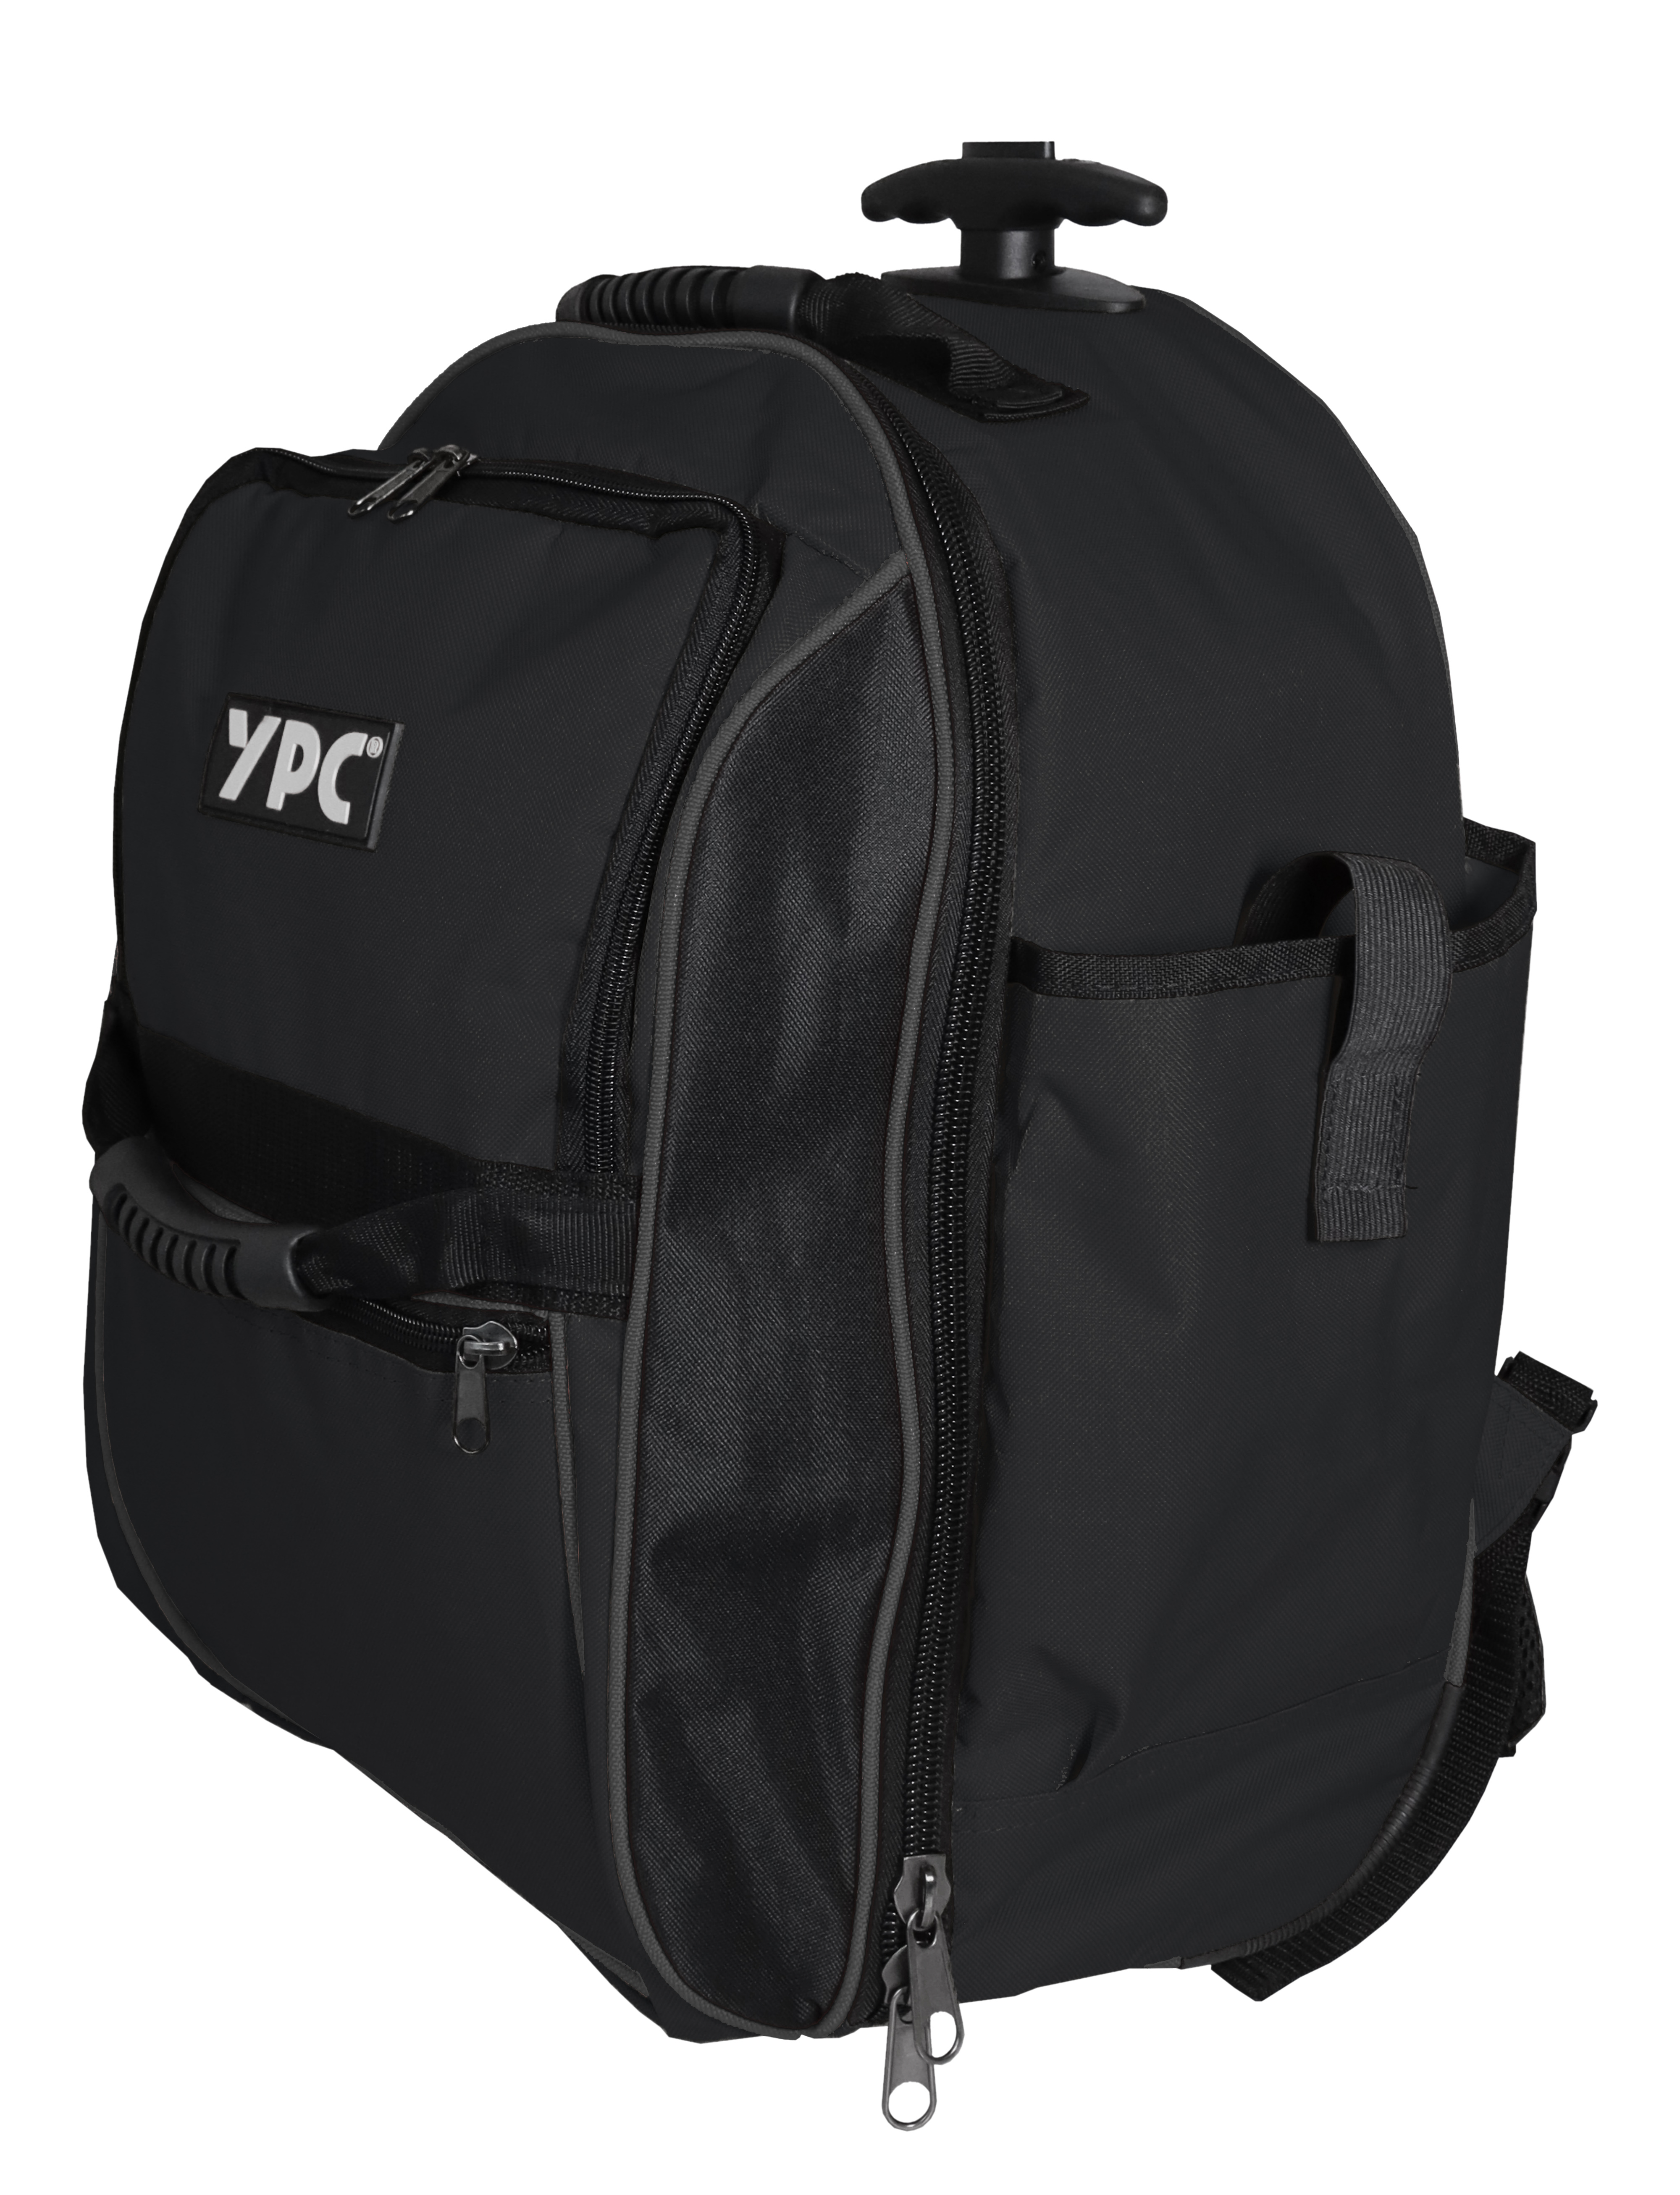 "Juggernaut" trolley tool backpack XXL, black, 54x36x25cm, 15 kg load capacity